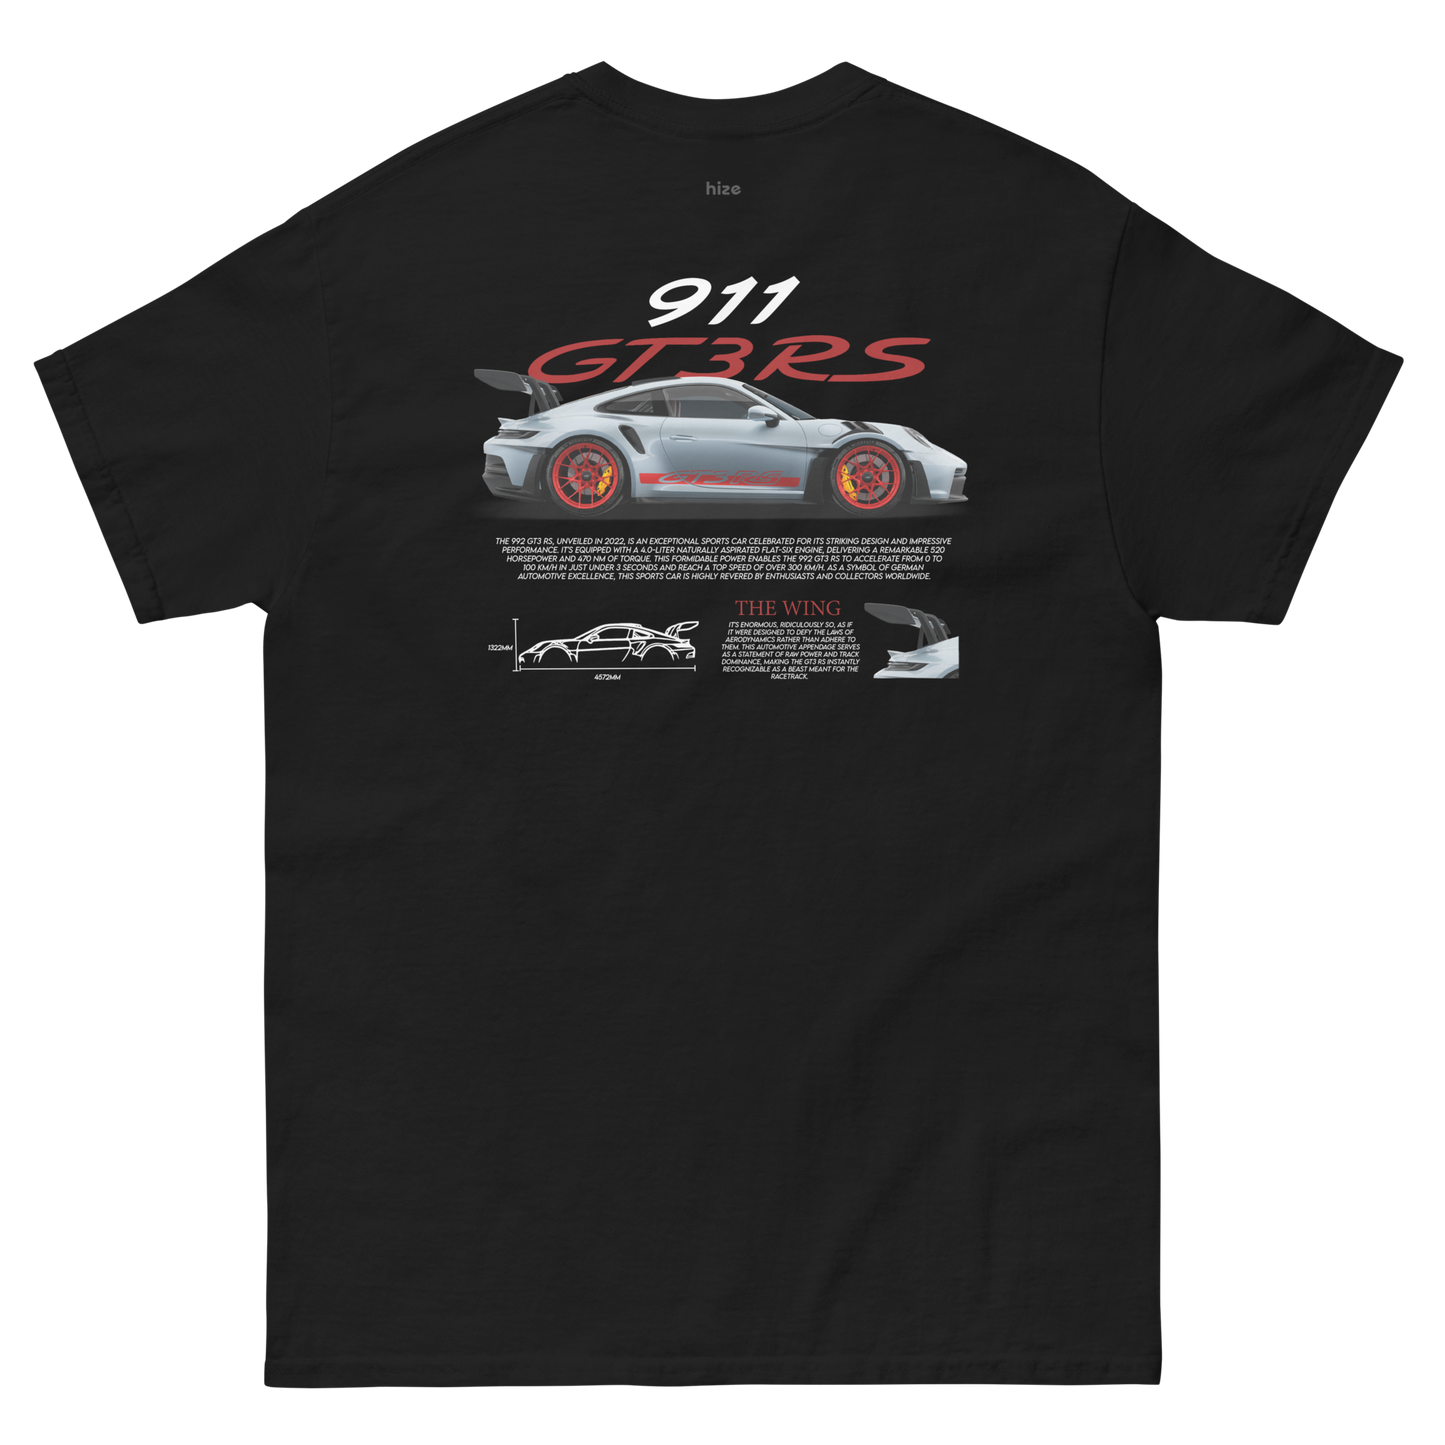 Porsche 911 GT3 RS 992 T-shirt - Black Back View